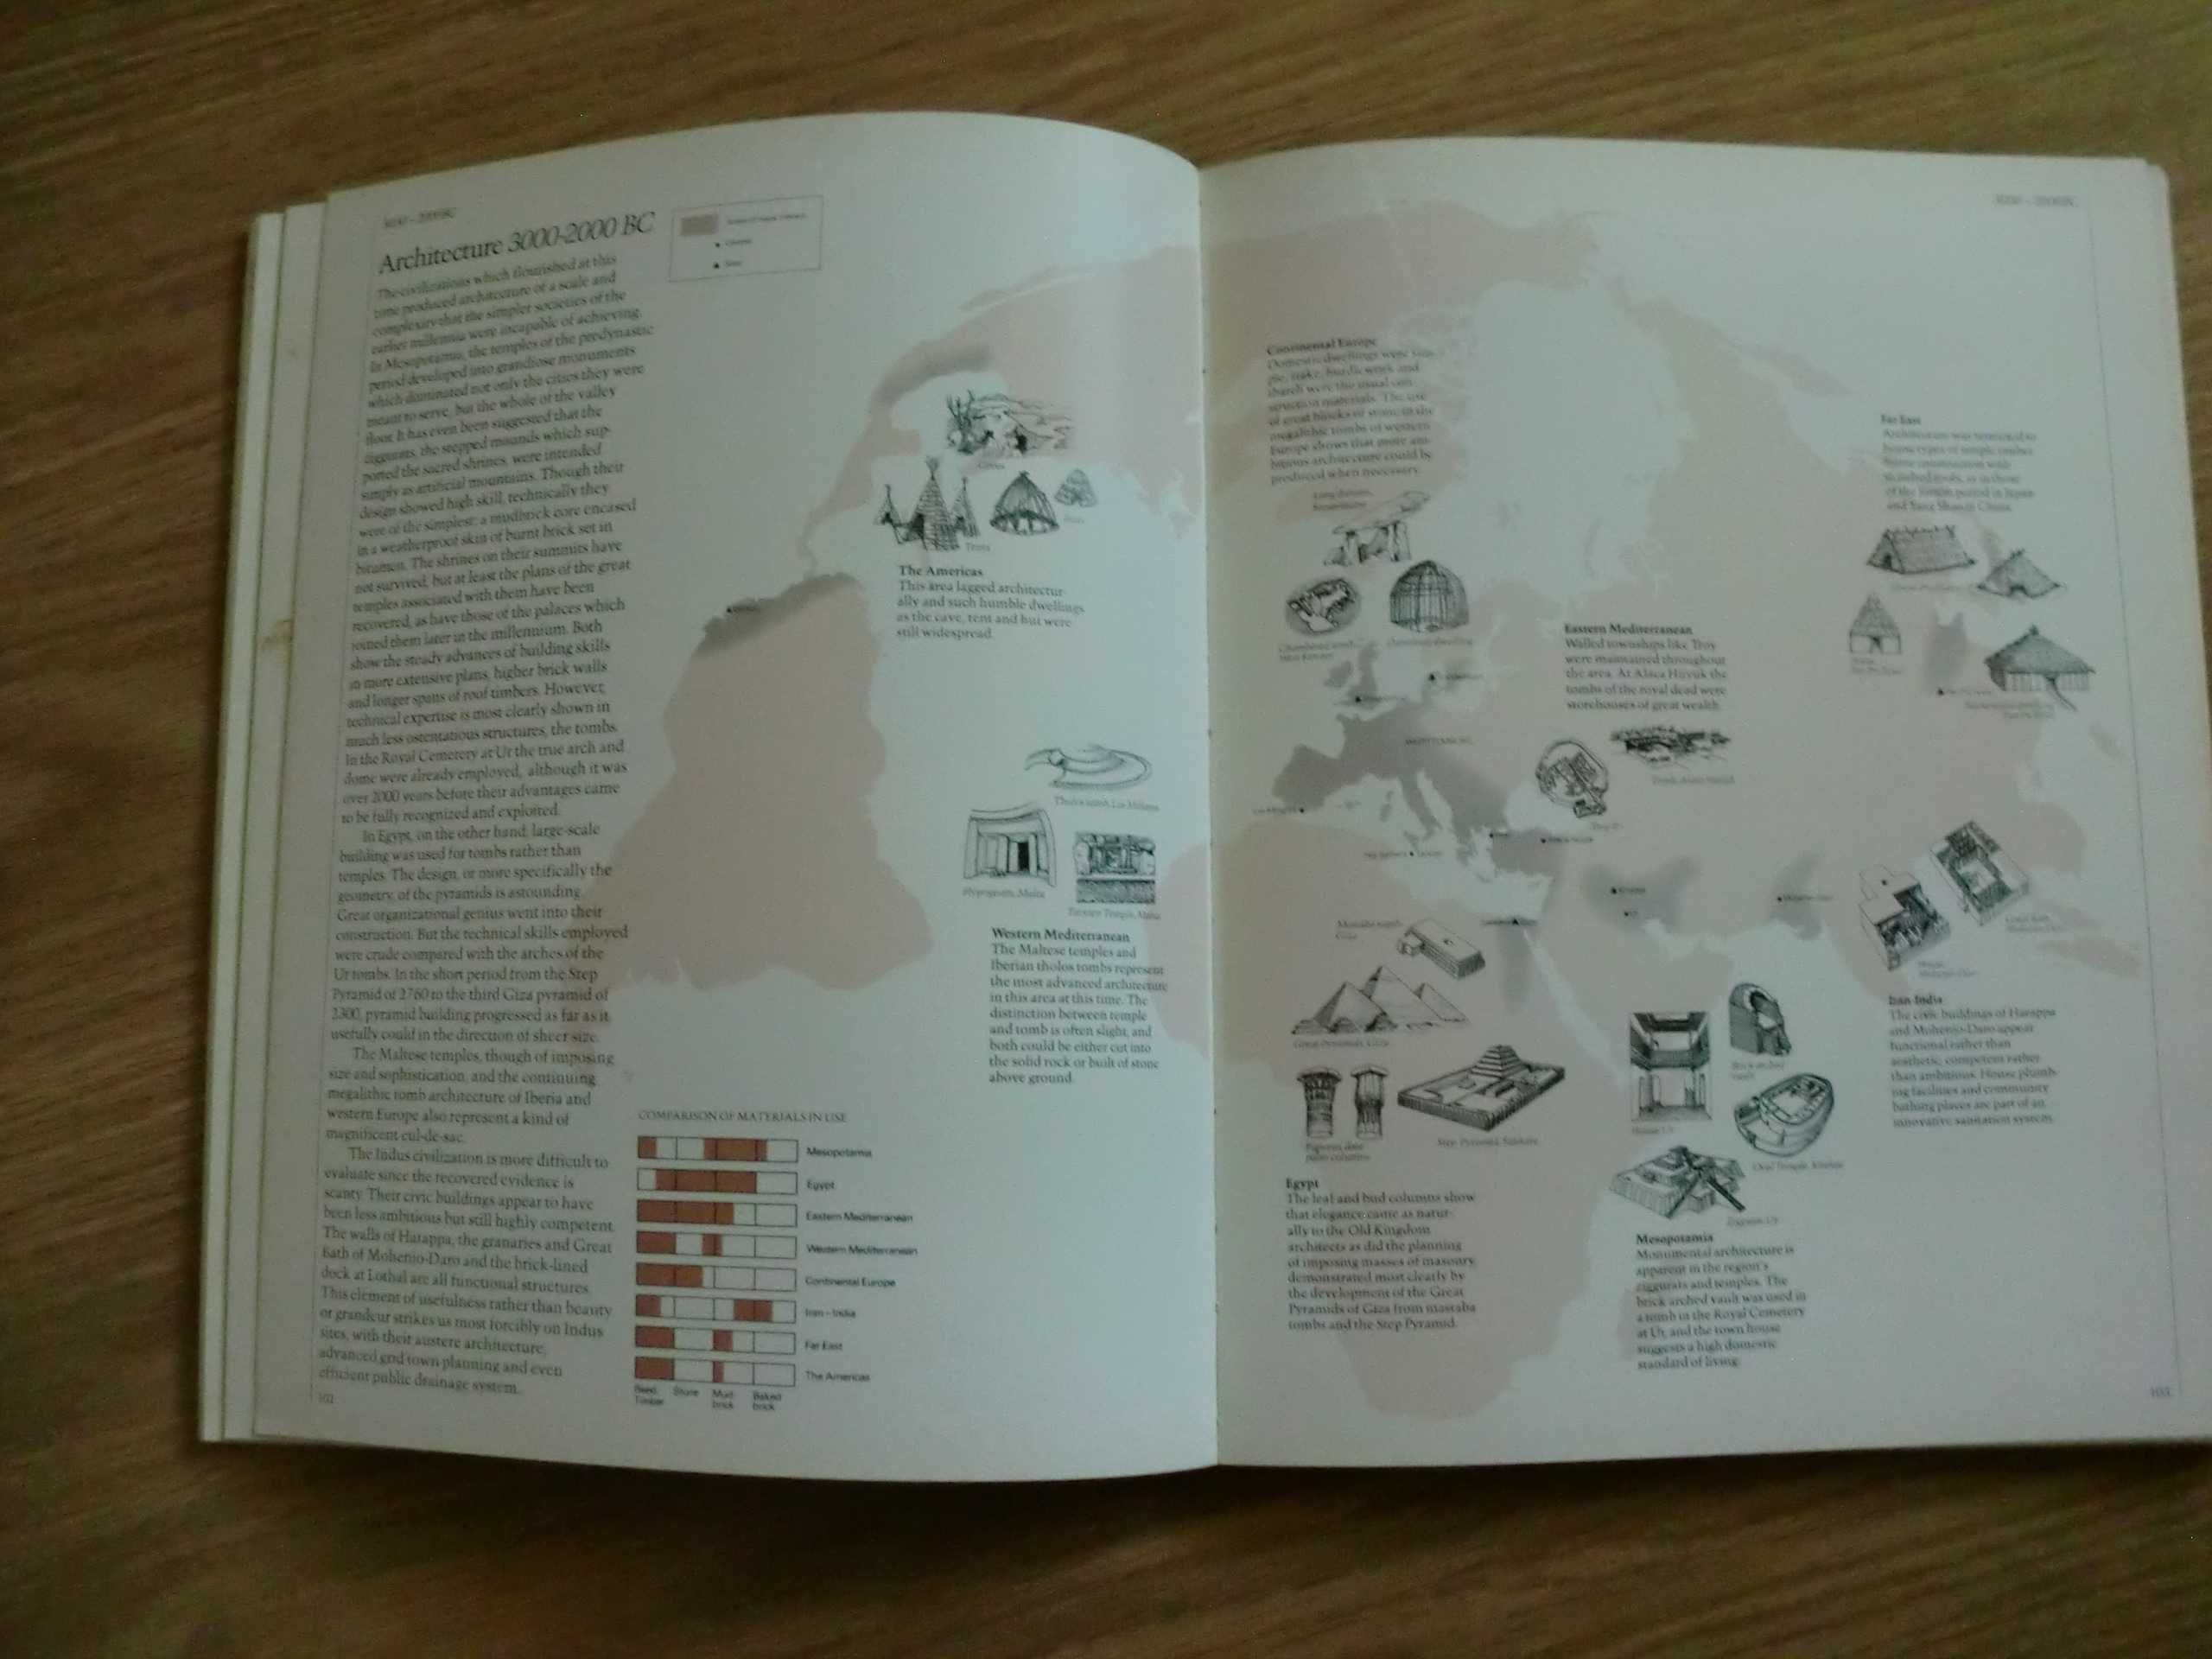 The Atlas of Erly Man
de Jacquetta Hawkes